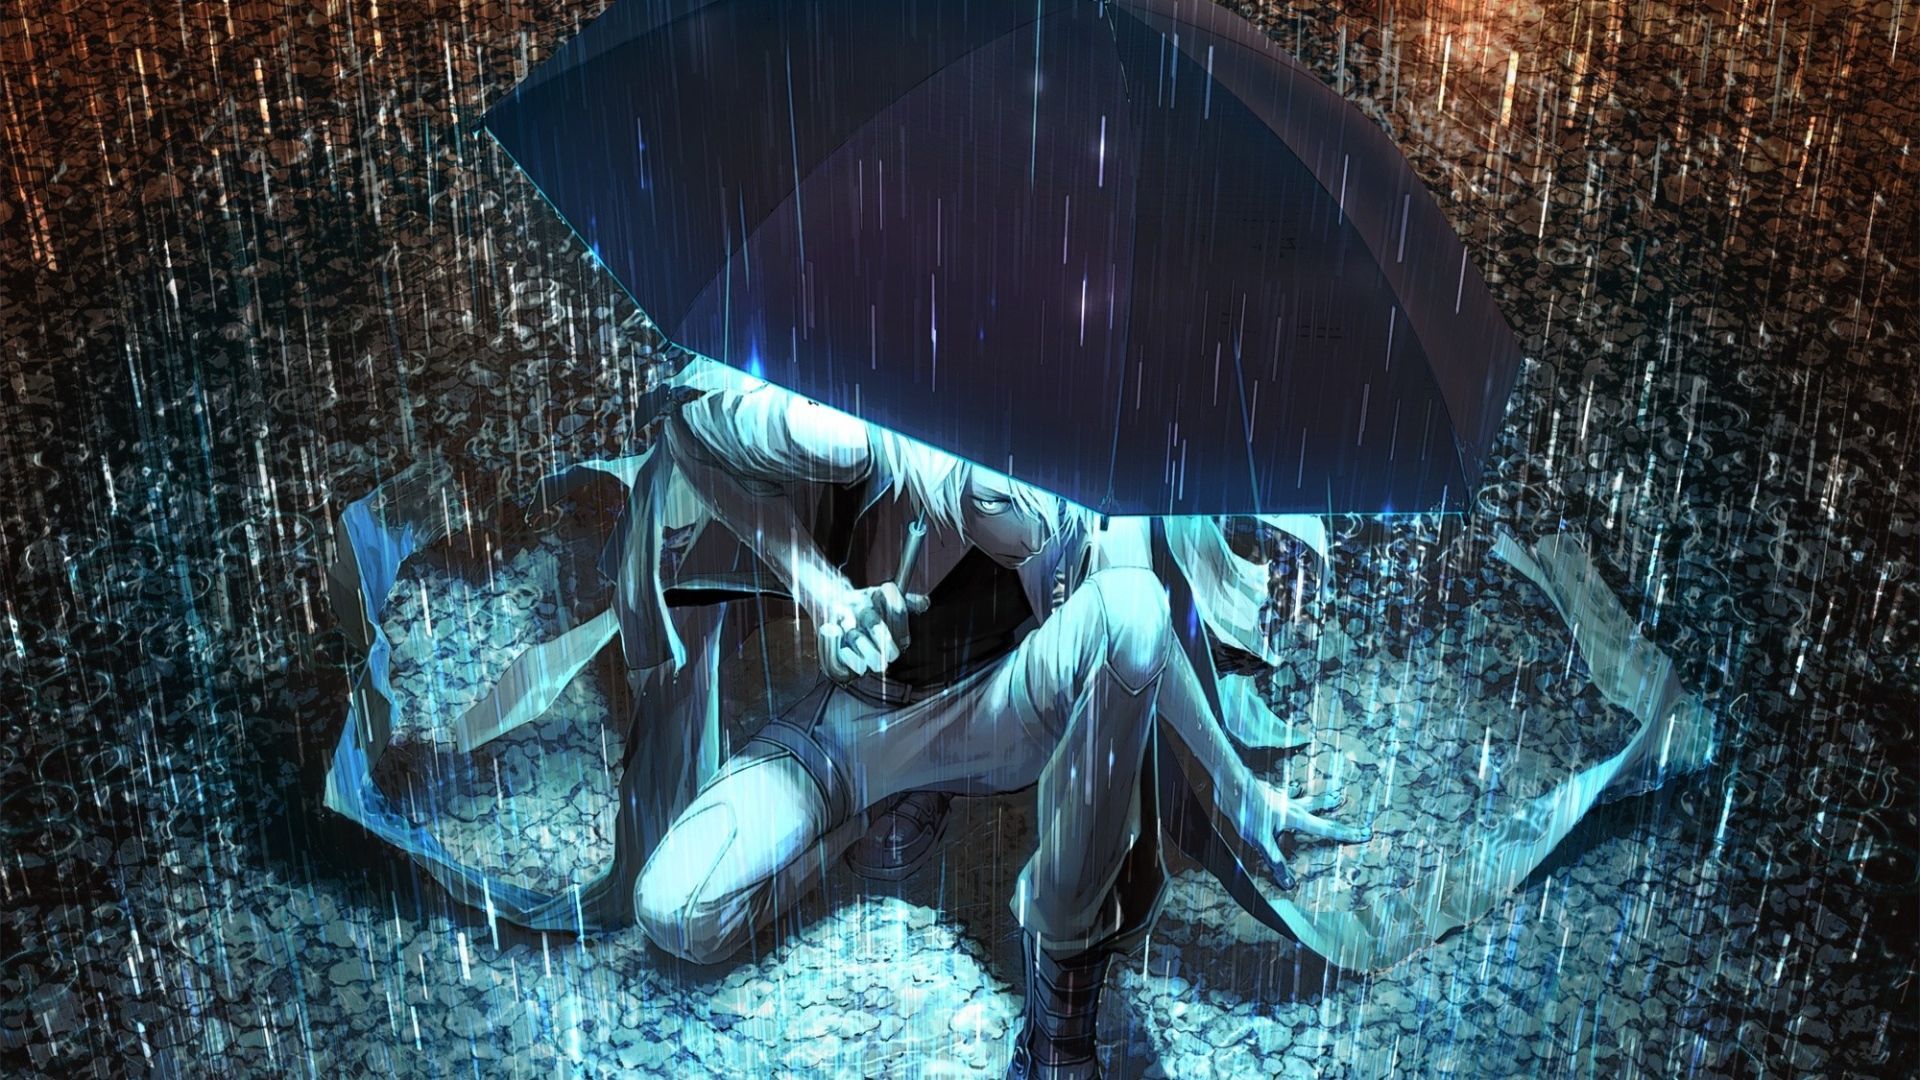 Wallpaper yuanmaru, man, umbrella, rain, light, night, puddles. Anime wallpaper 1920x 1080p anime wallpaper, Anime wallpaper